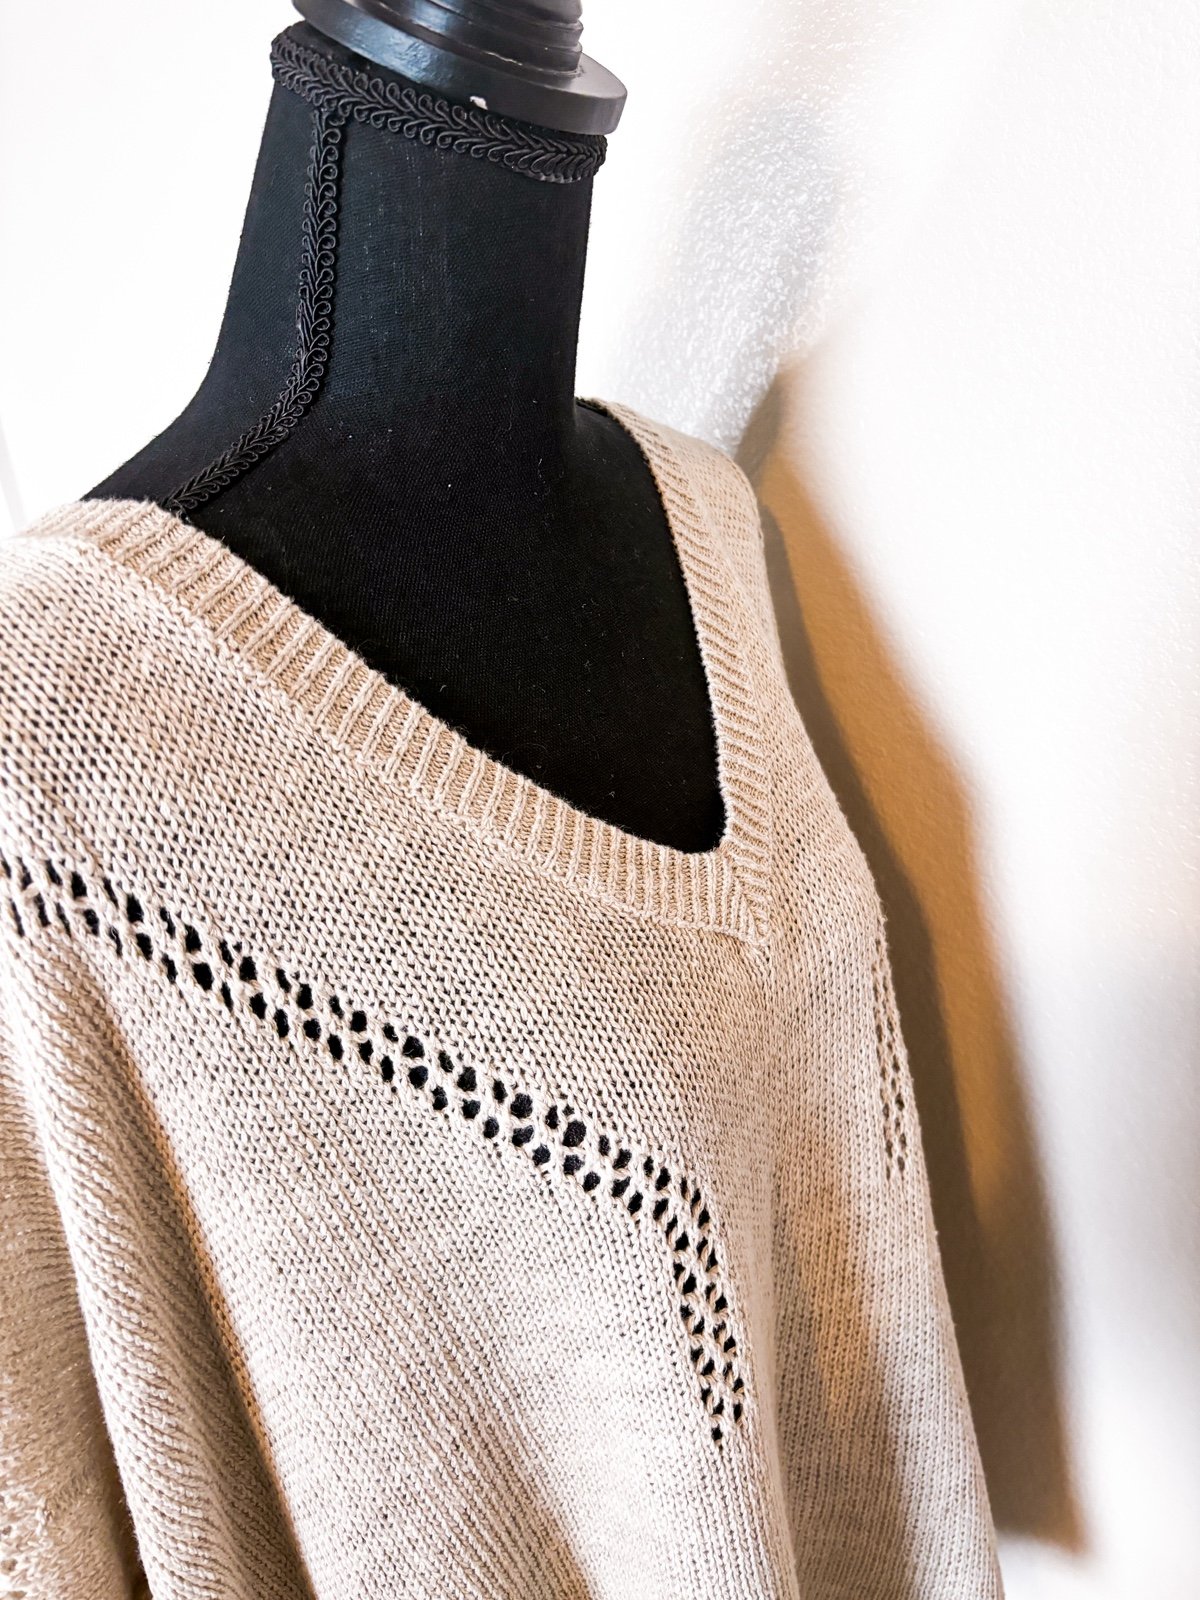 Stylish Chico’s Poncho Sweater Beige Linen Cotton Blend Size L/XL g3sMmNTXz Great